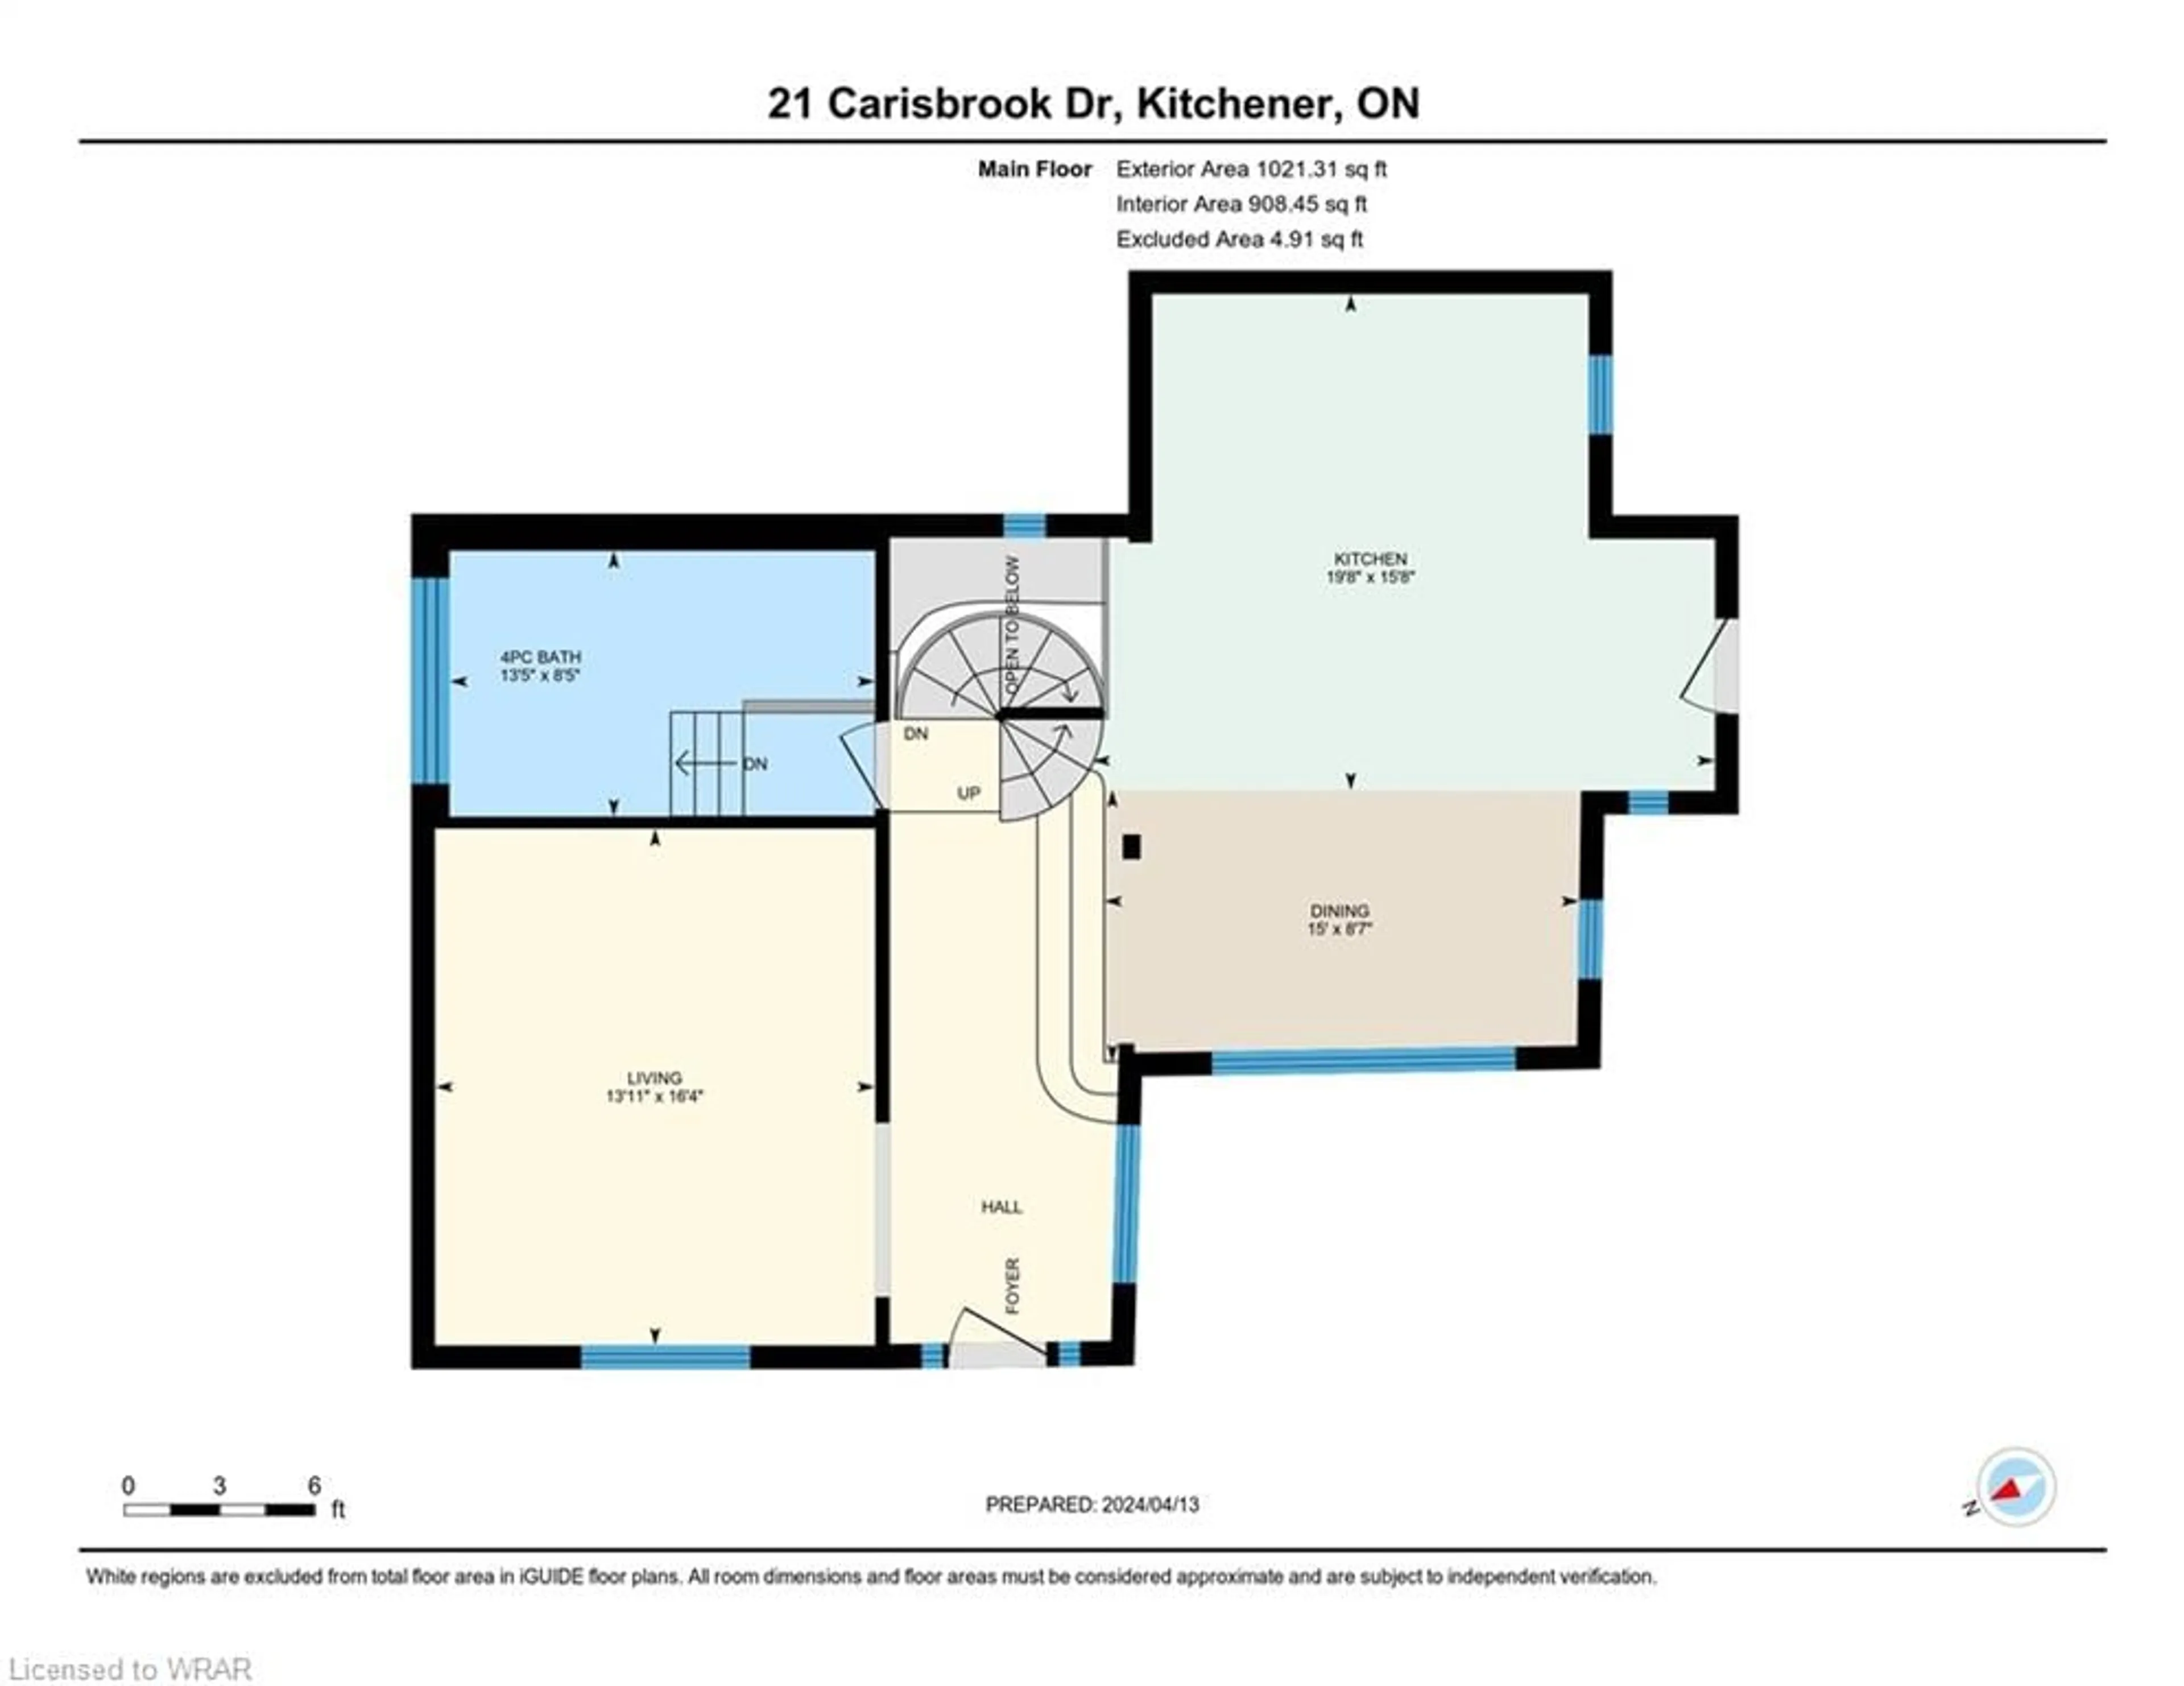 Floor plan for 21 Carisbrook Dr, Kitchener Ontario N2K 4C7